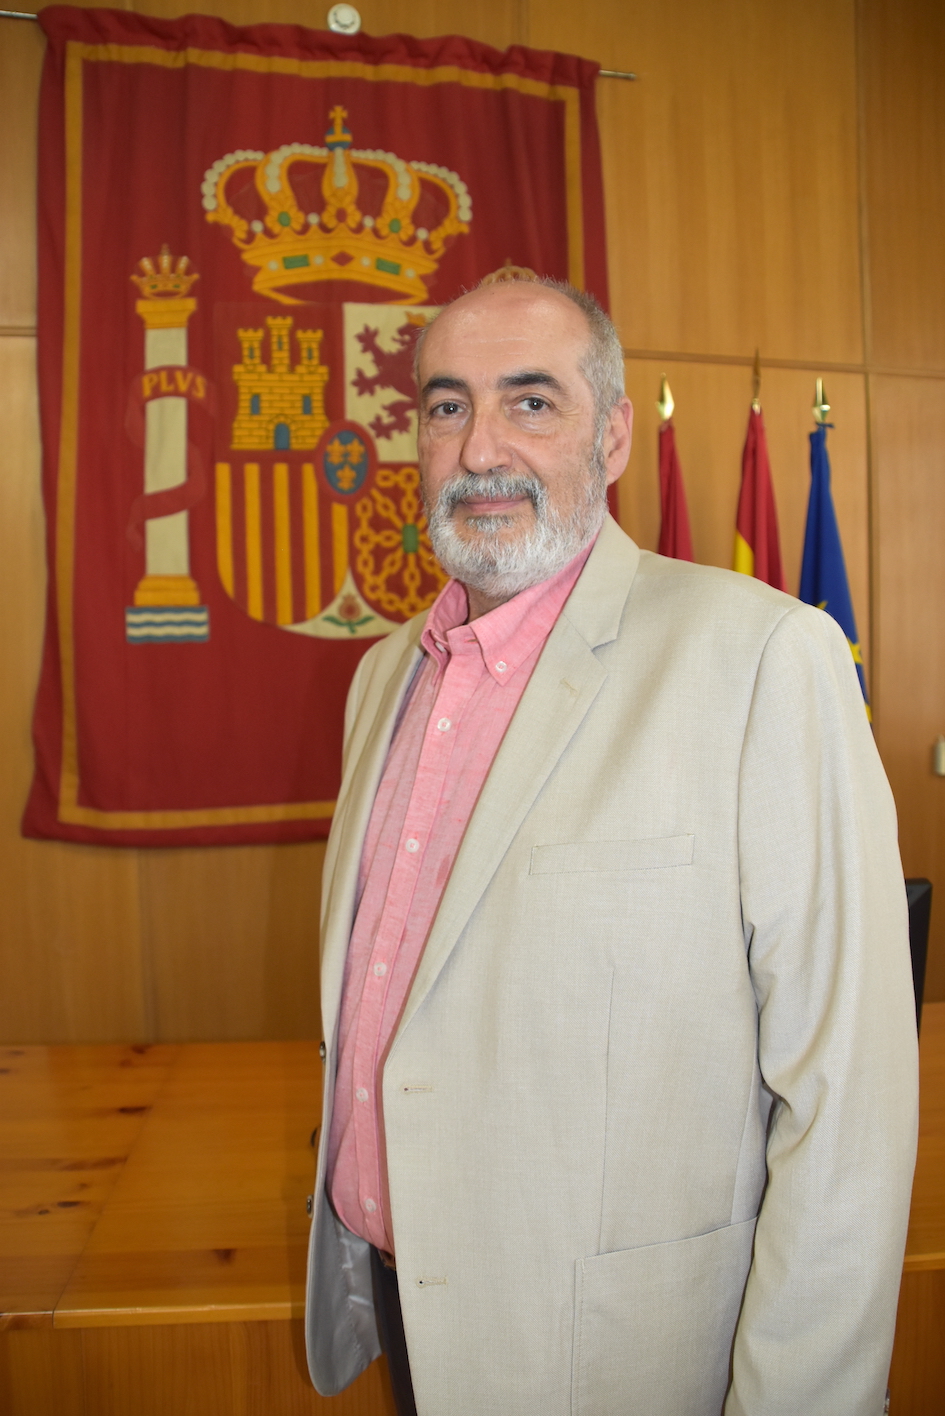 Manuel Pozo